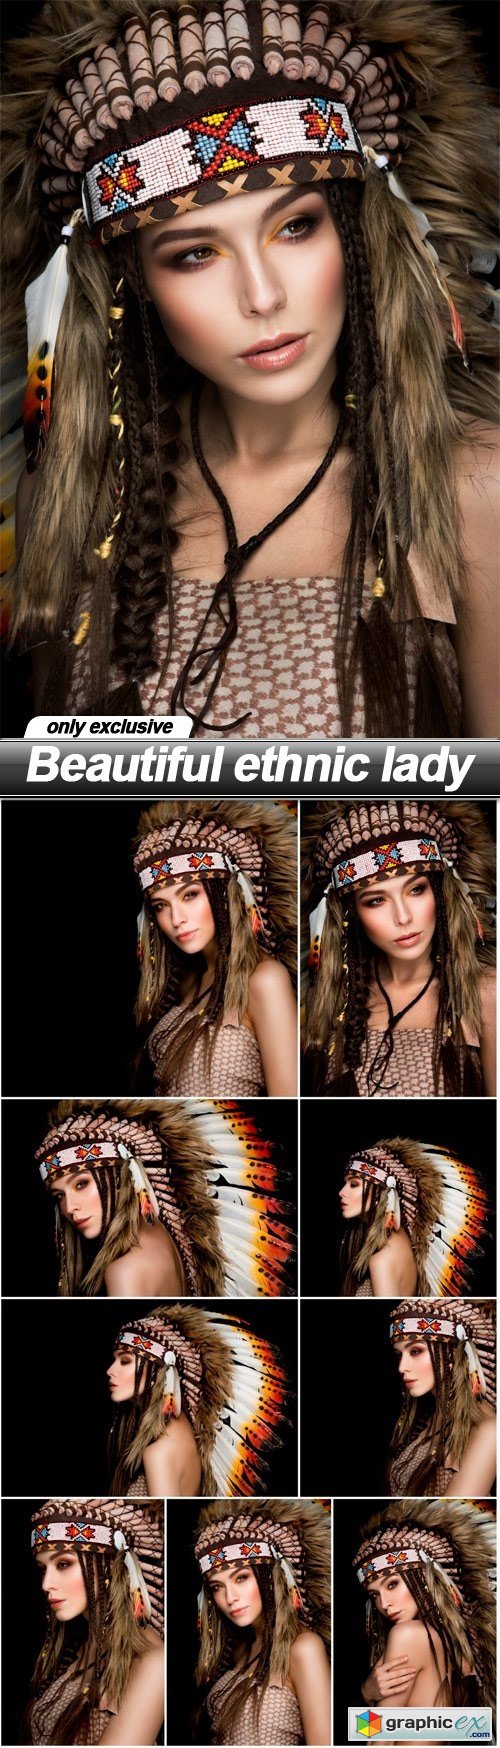 Beautiful ethnic lady - 9 UHQ JPEG